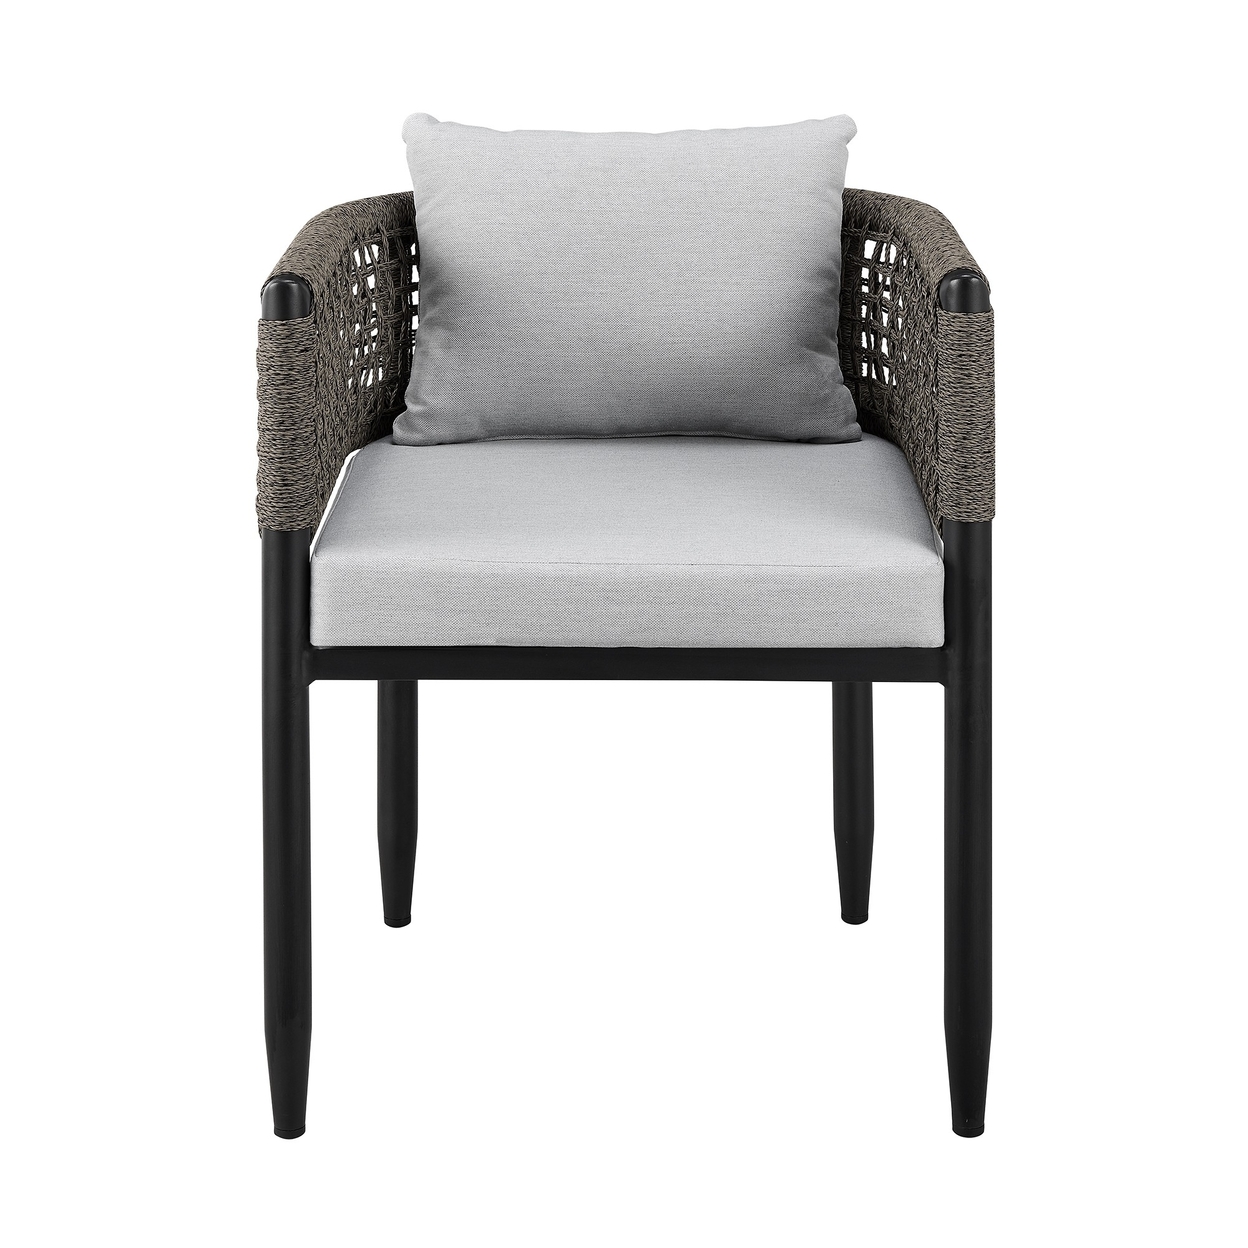 Troy 23 Inch Aluminum Patio Dining Chair, Set Of 2, Gray Rope Woven, Black- Saltoro Sherpi